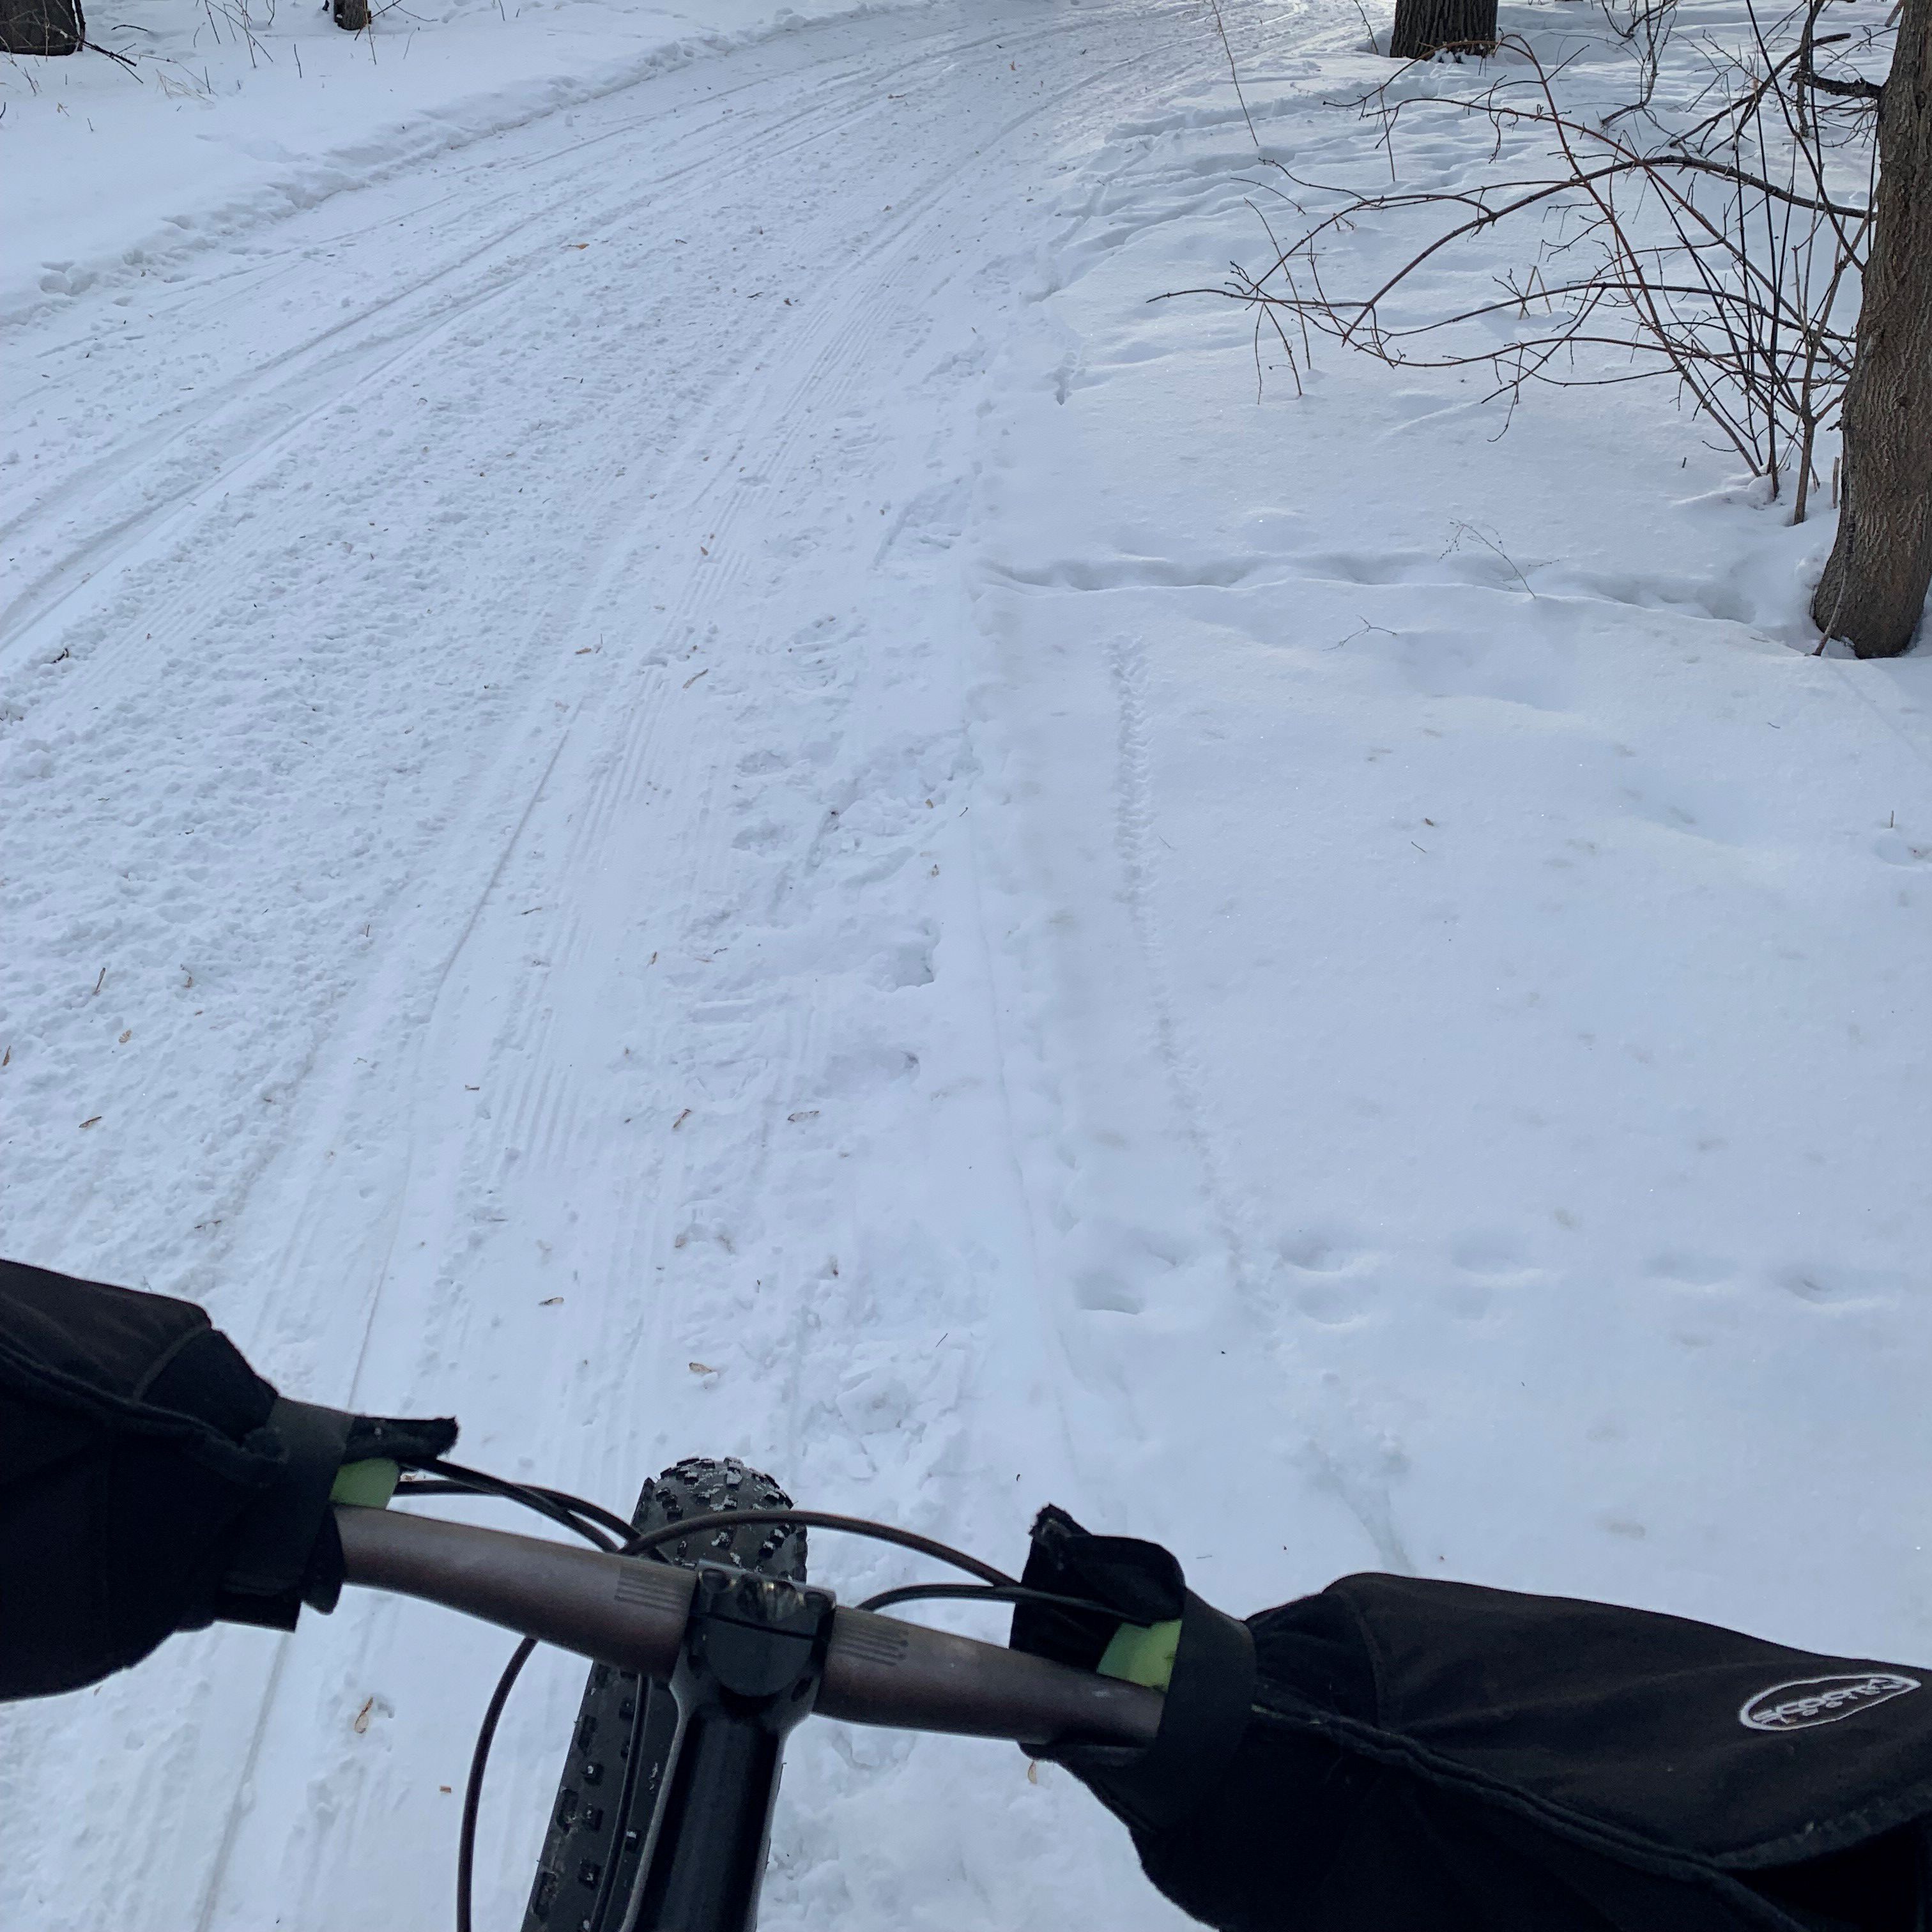 Biking on Grand Forks Greenway on snowy day